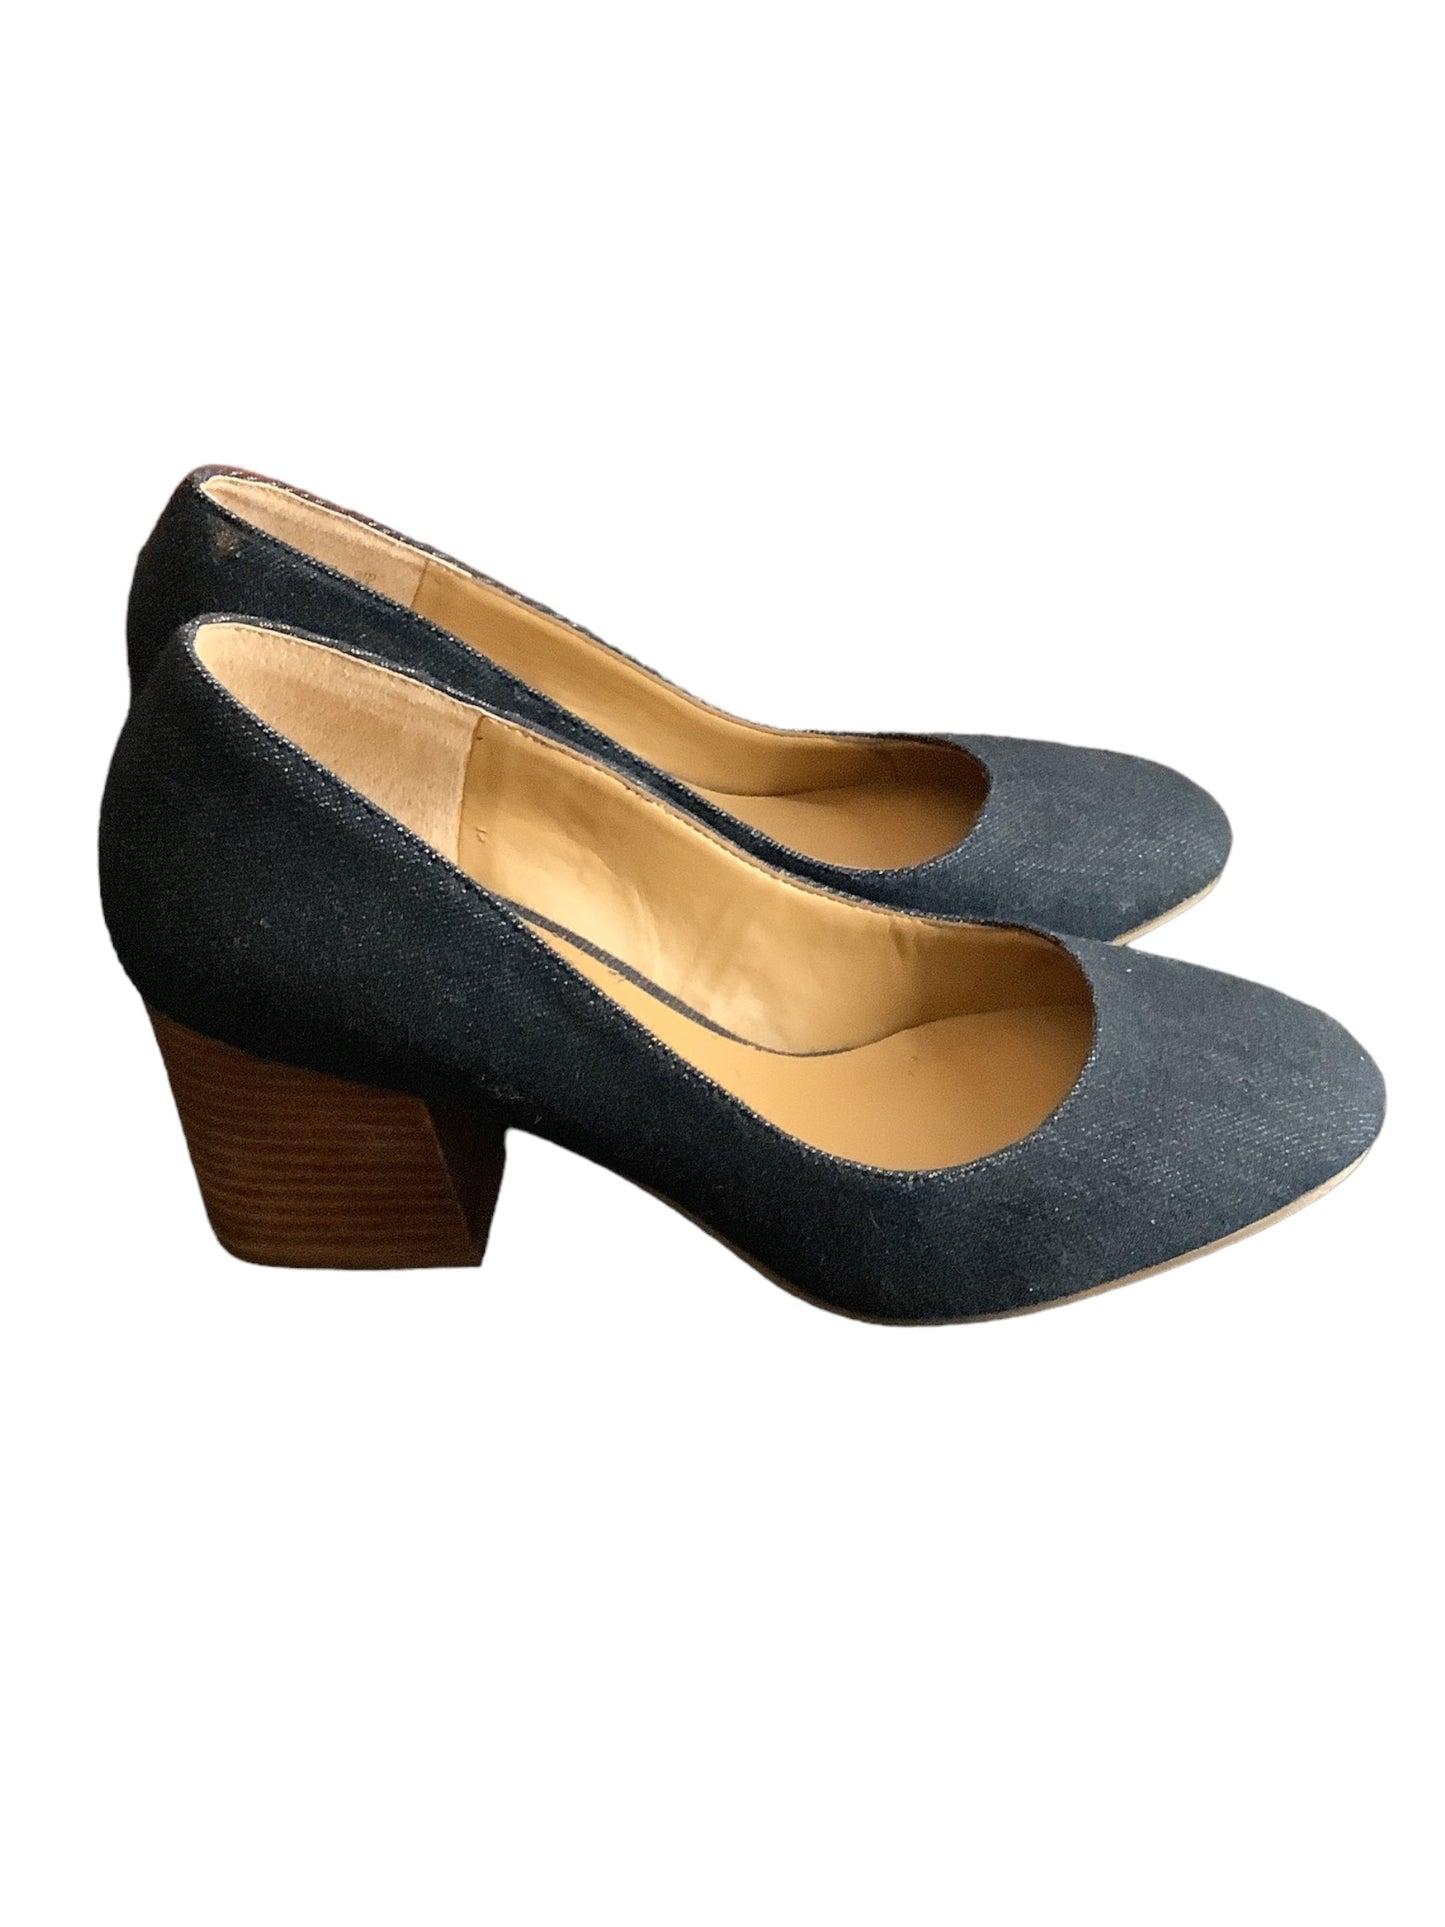 Denim Shoes Heels Block Franco Sarto, Size 6